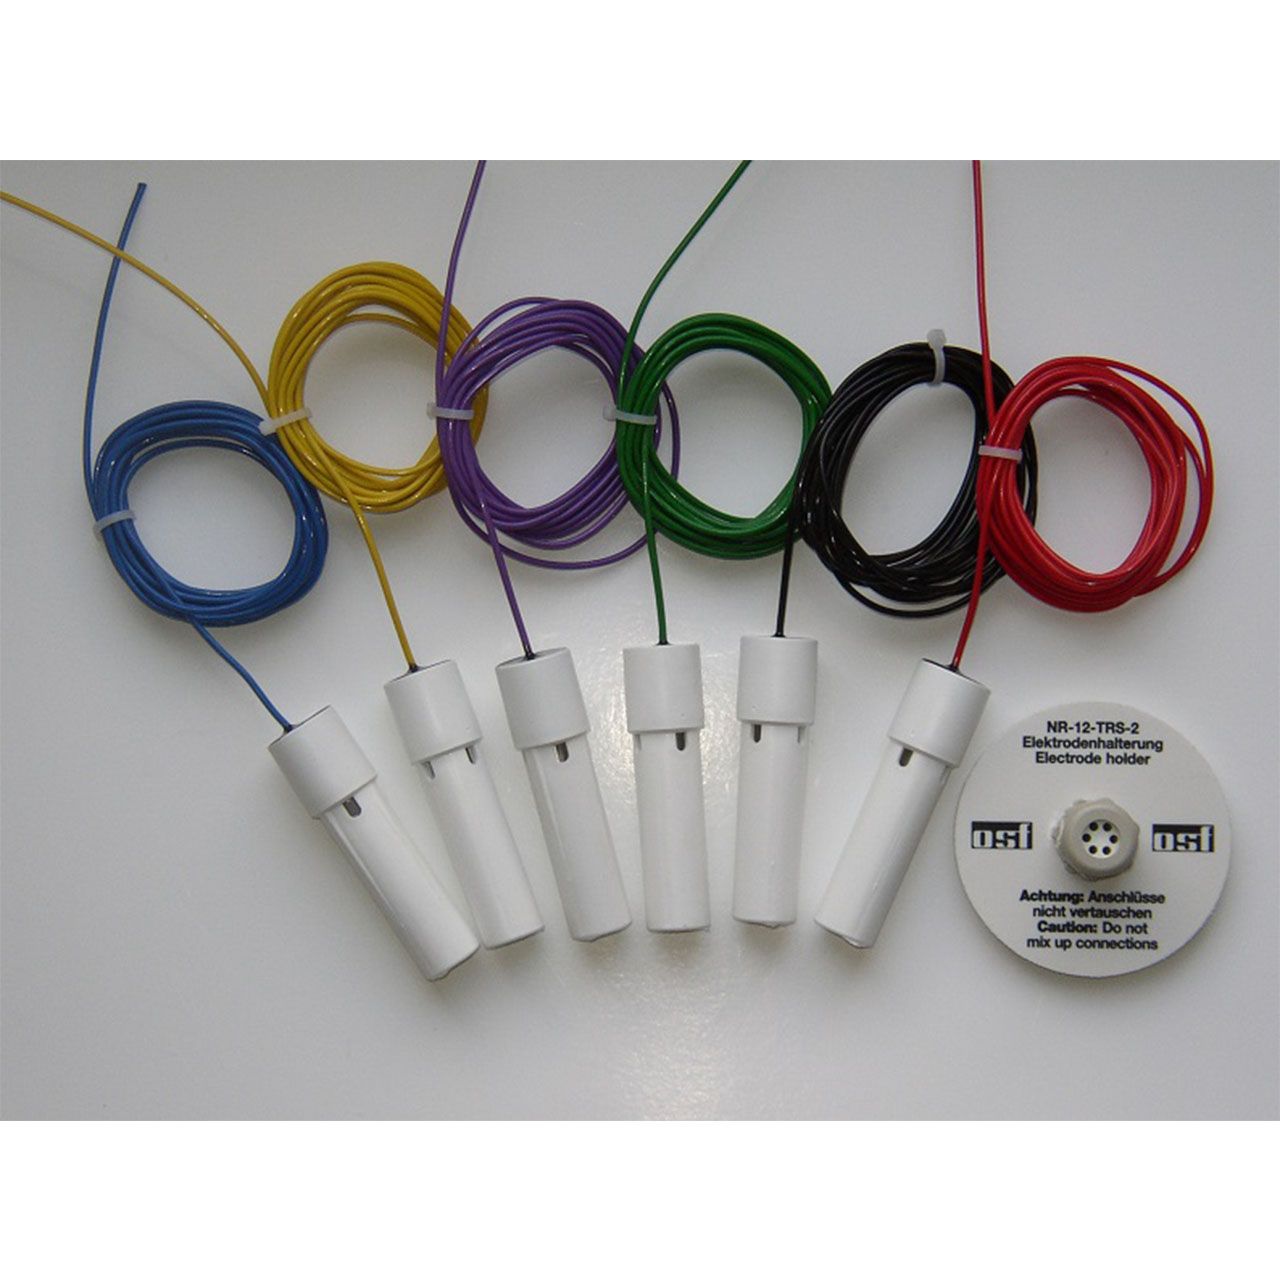 Elektrodensatz 6-fach für Niveauregler NR-12-TRS-3 aus V4A